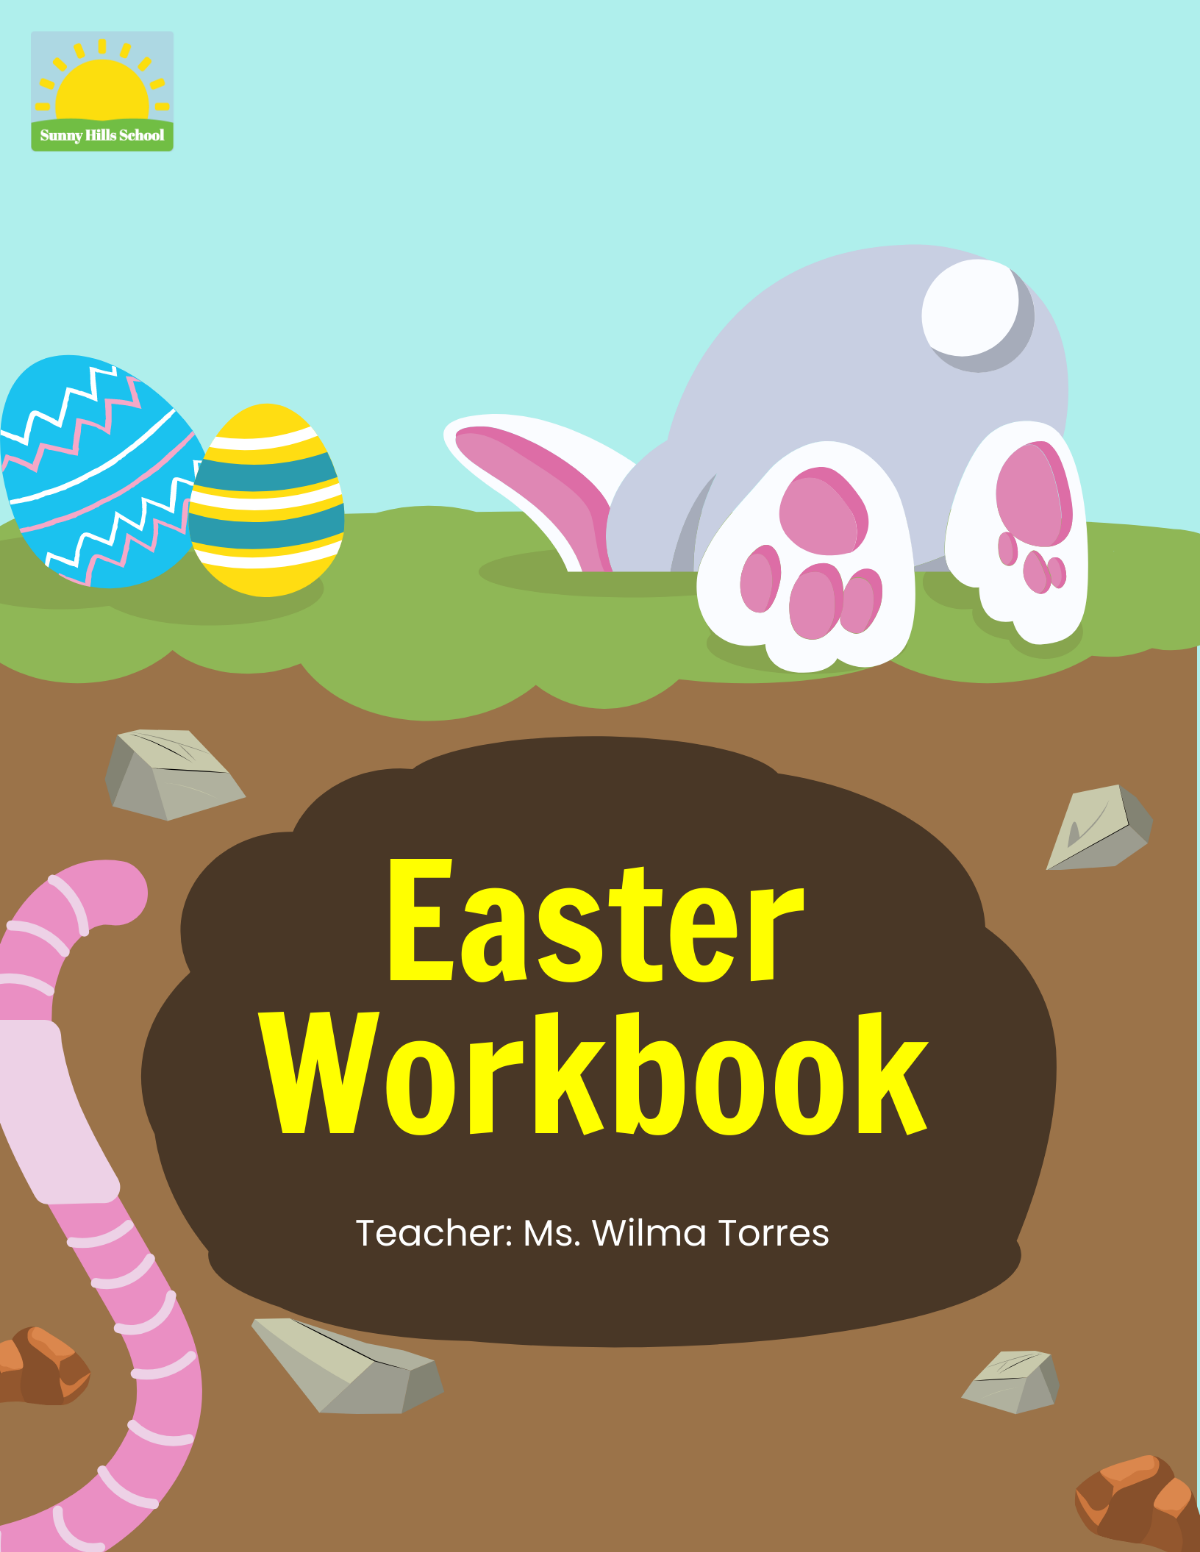 Easter Workbook Template